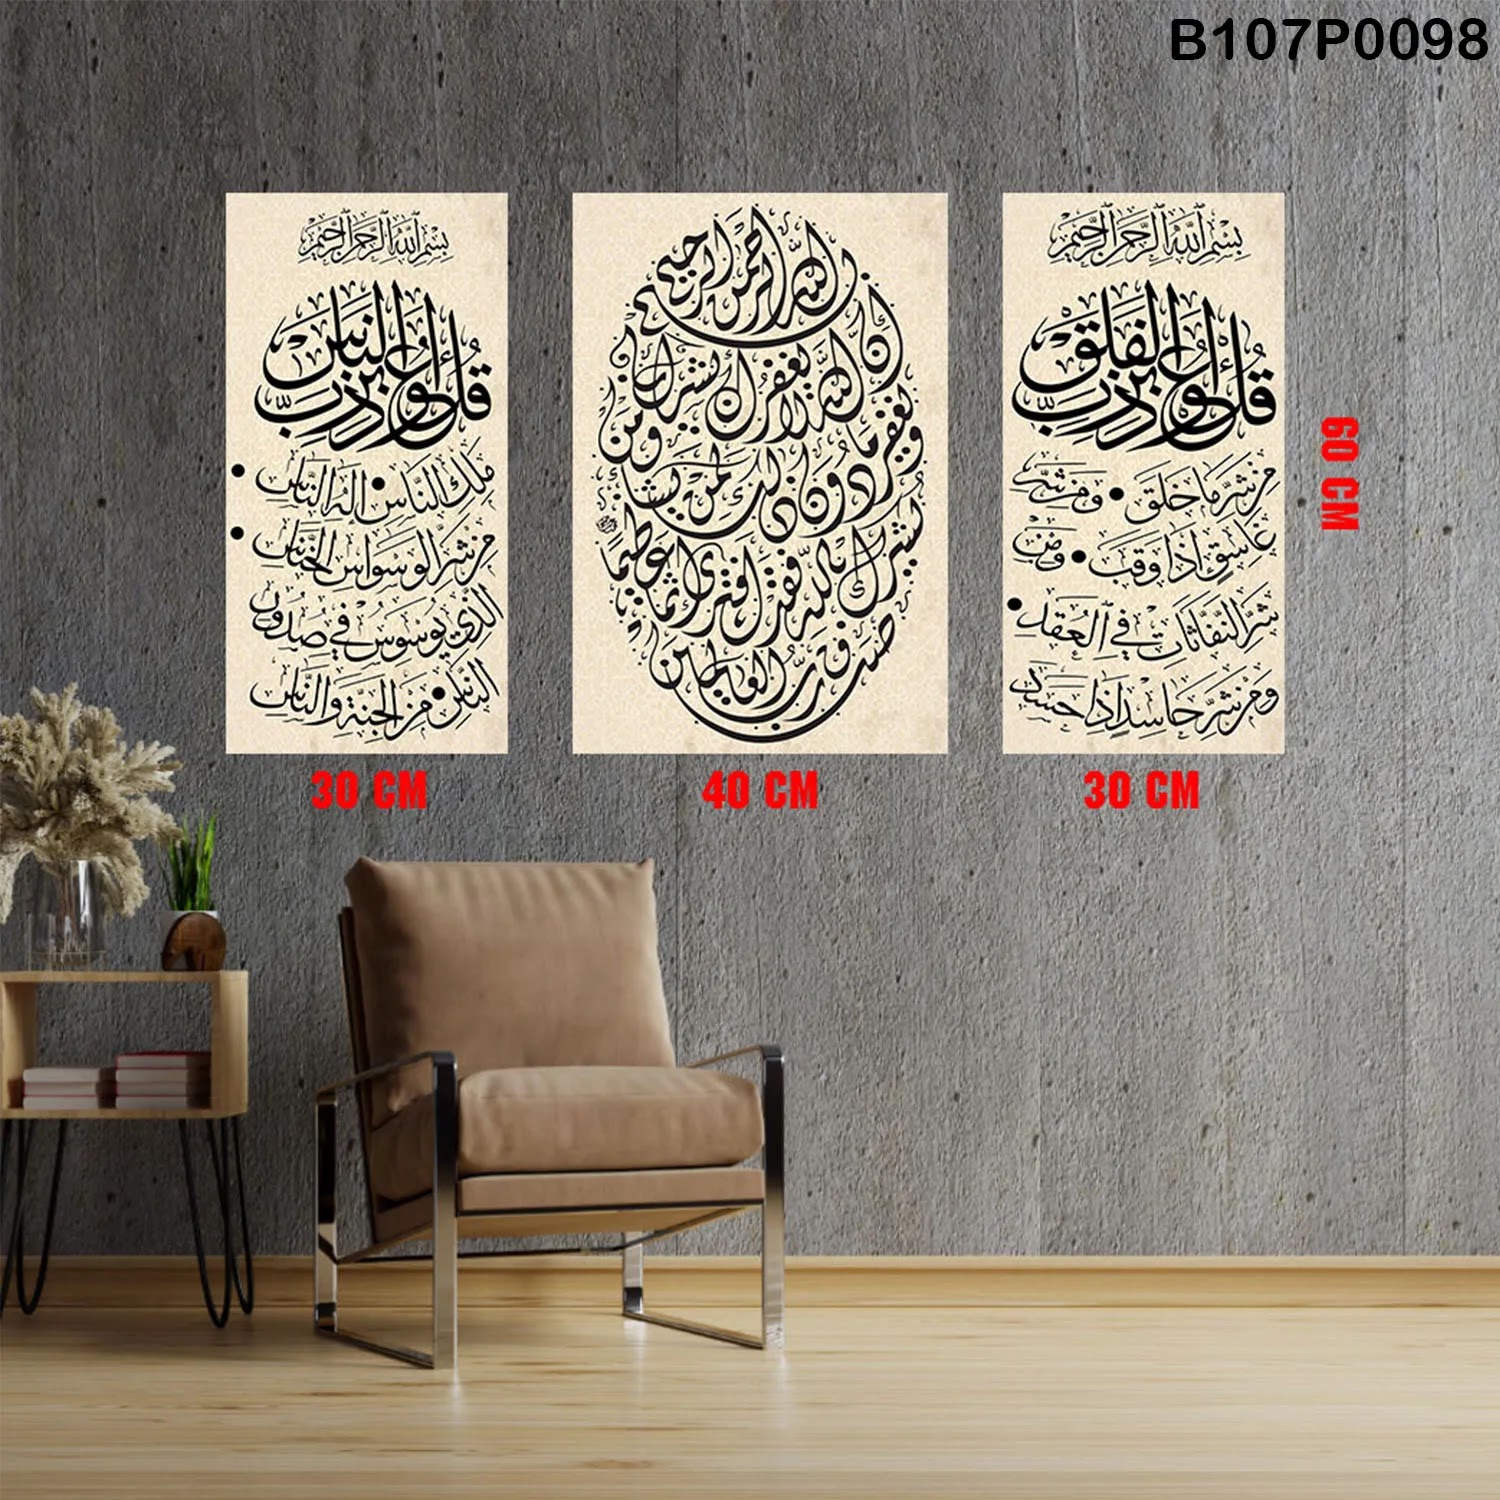 Beige Triptych panel with Arabic calligraphy for (Al-Falaq- Quran - Al-Nas)